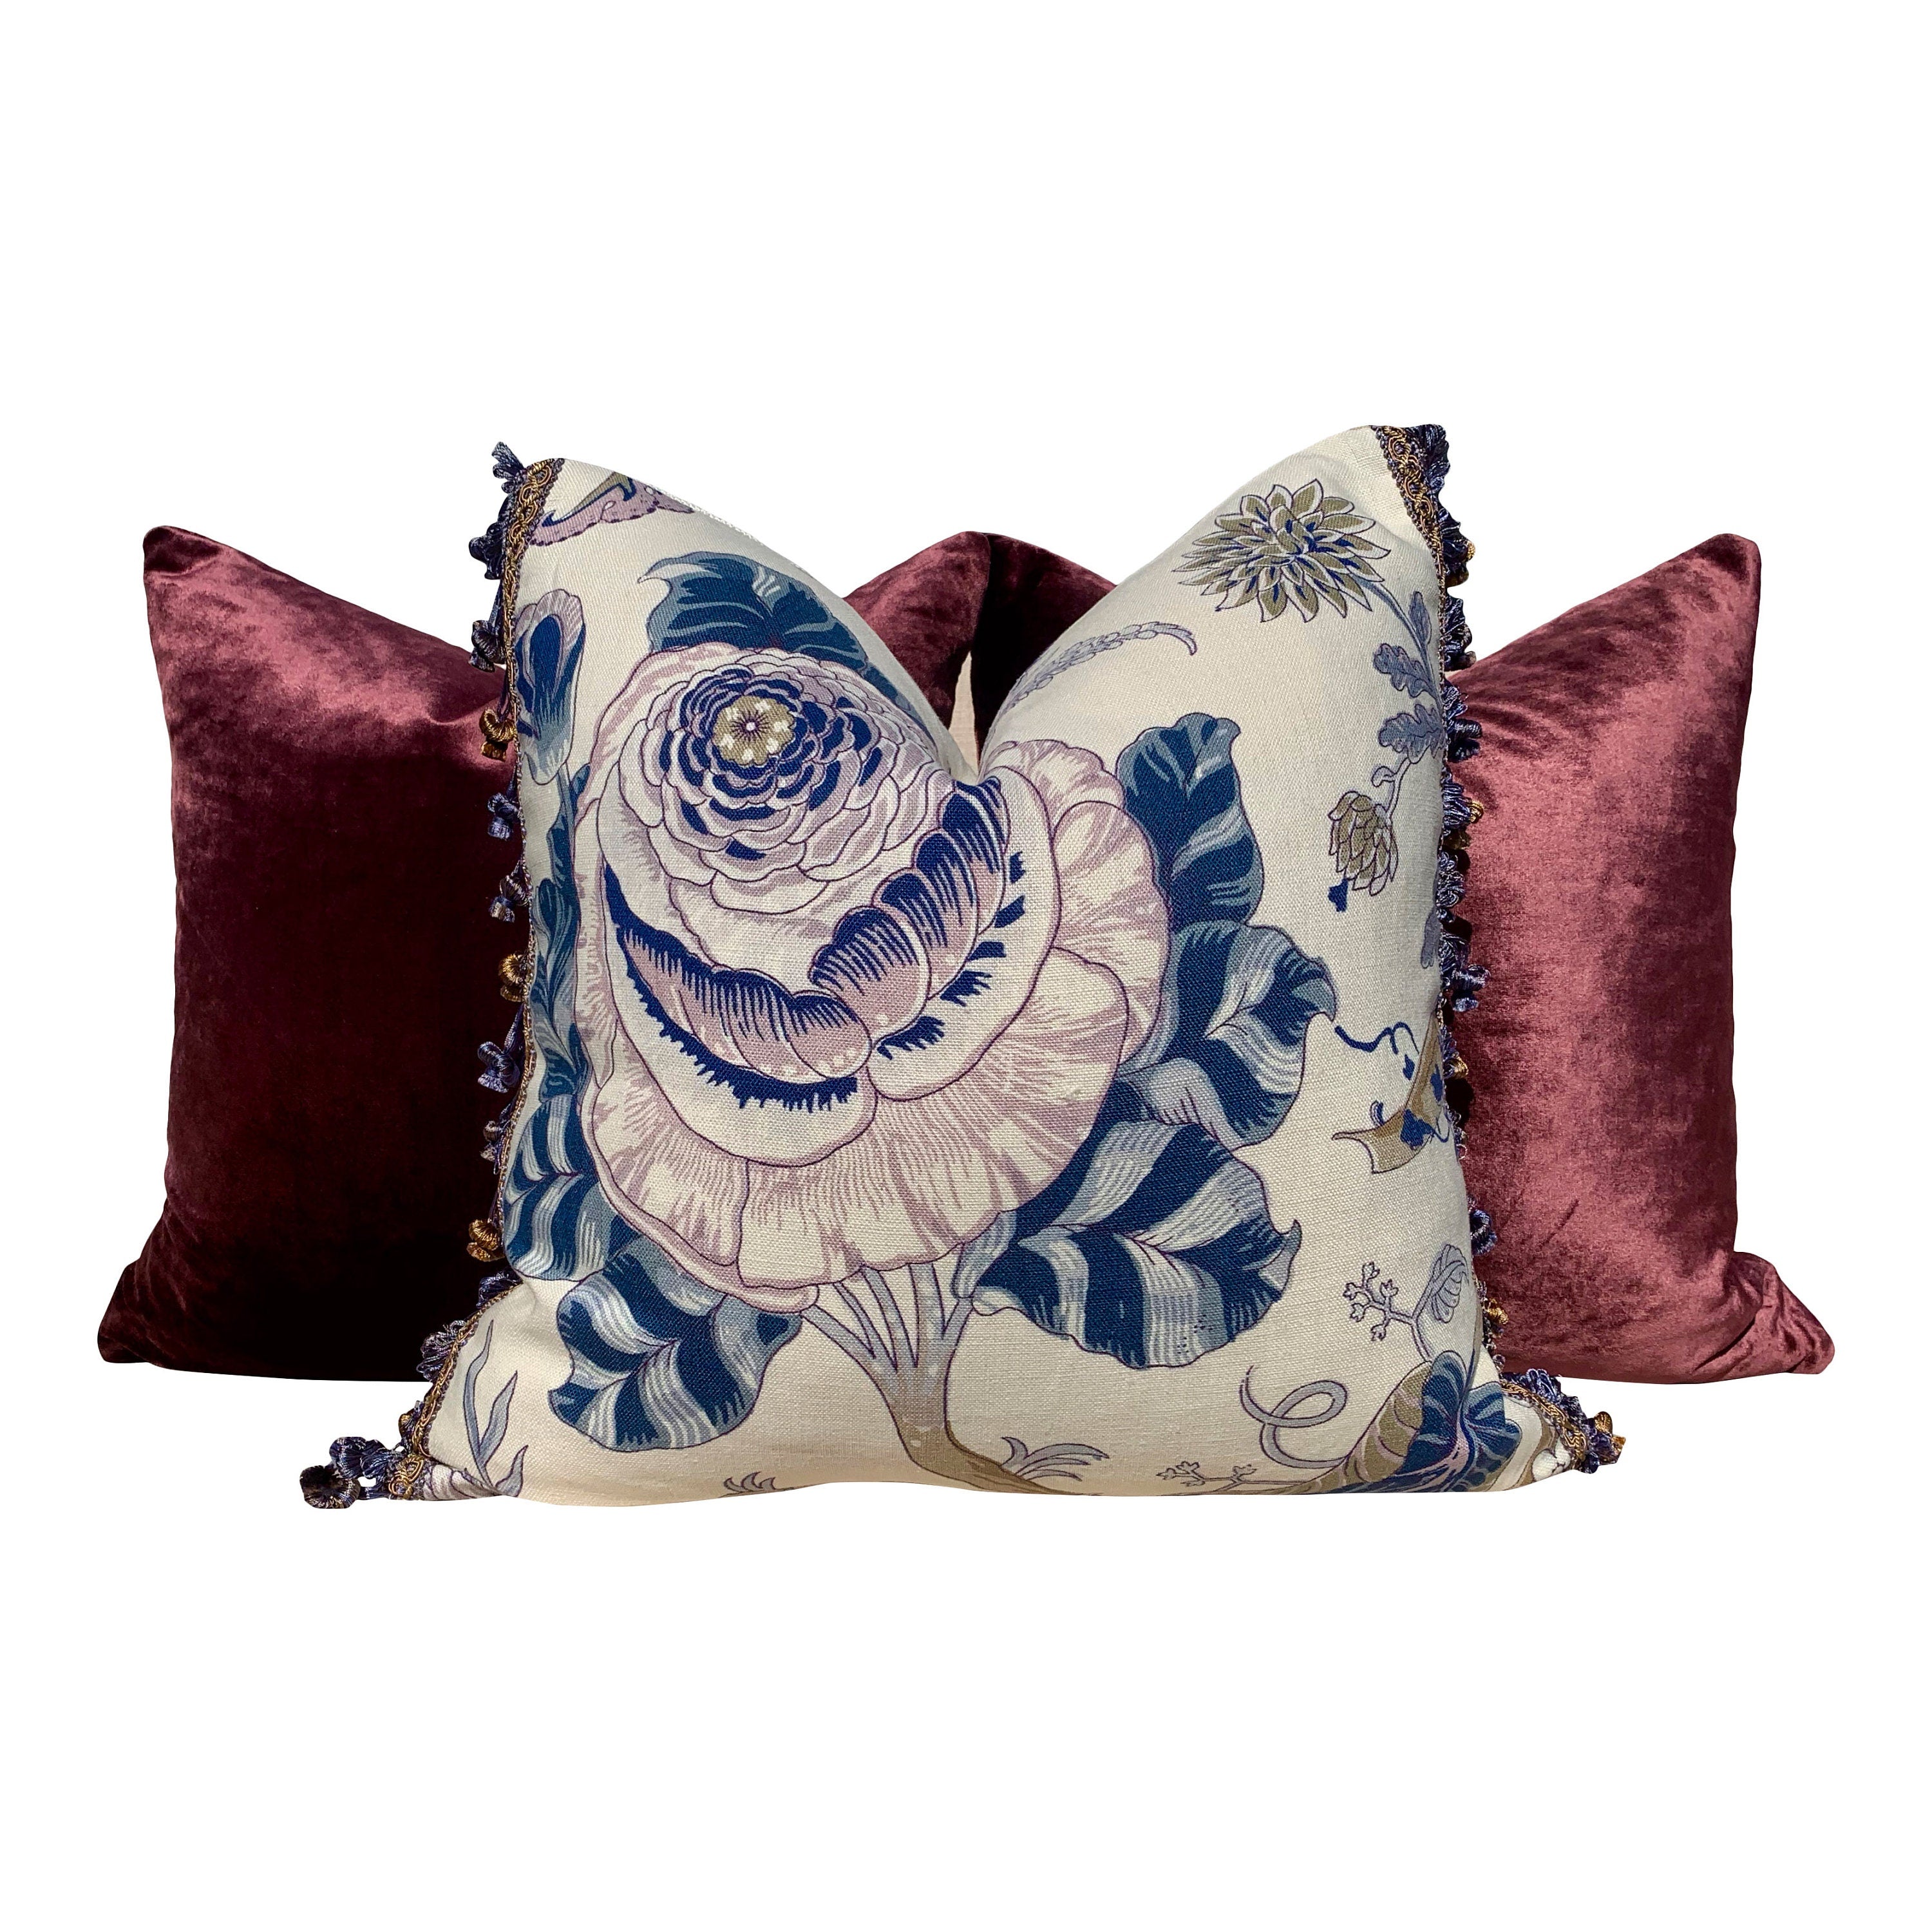 Schumacher Indian Arbre Pillow in BLue and Lavender, Onion Ball Trim. Floral Lumbar Pillow.